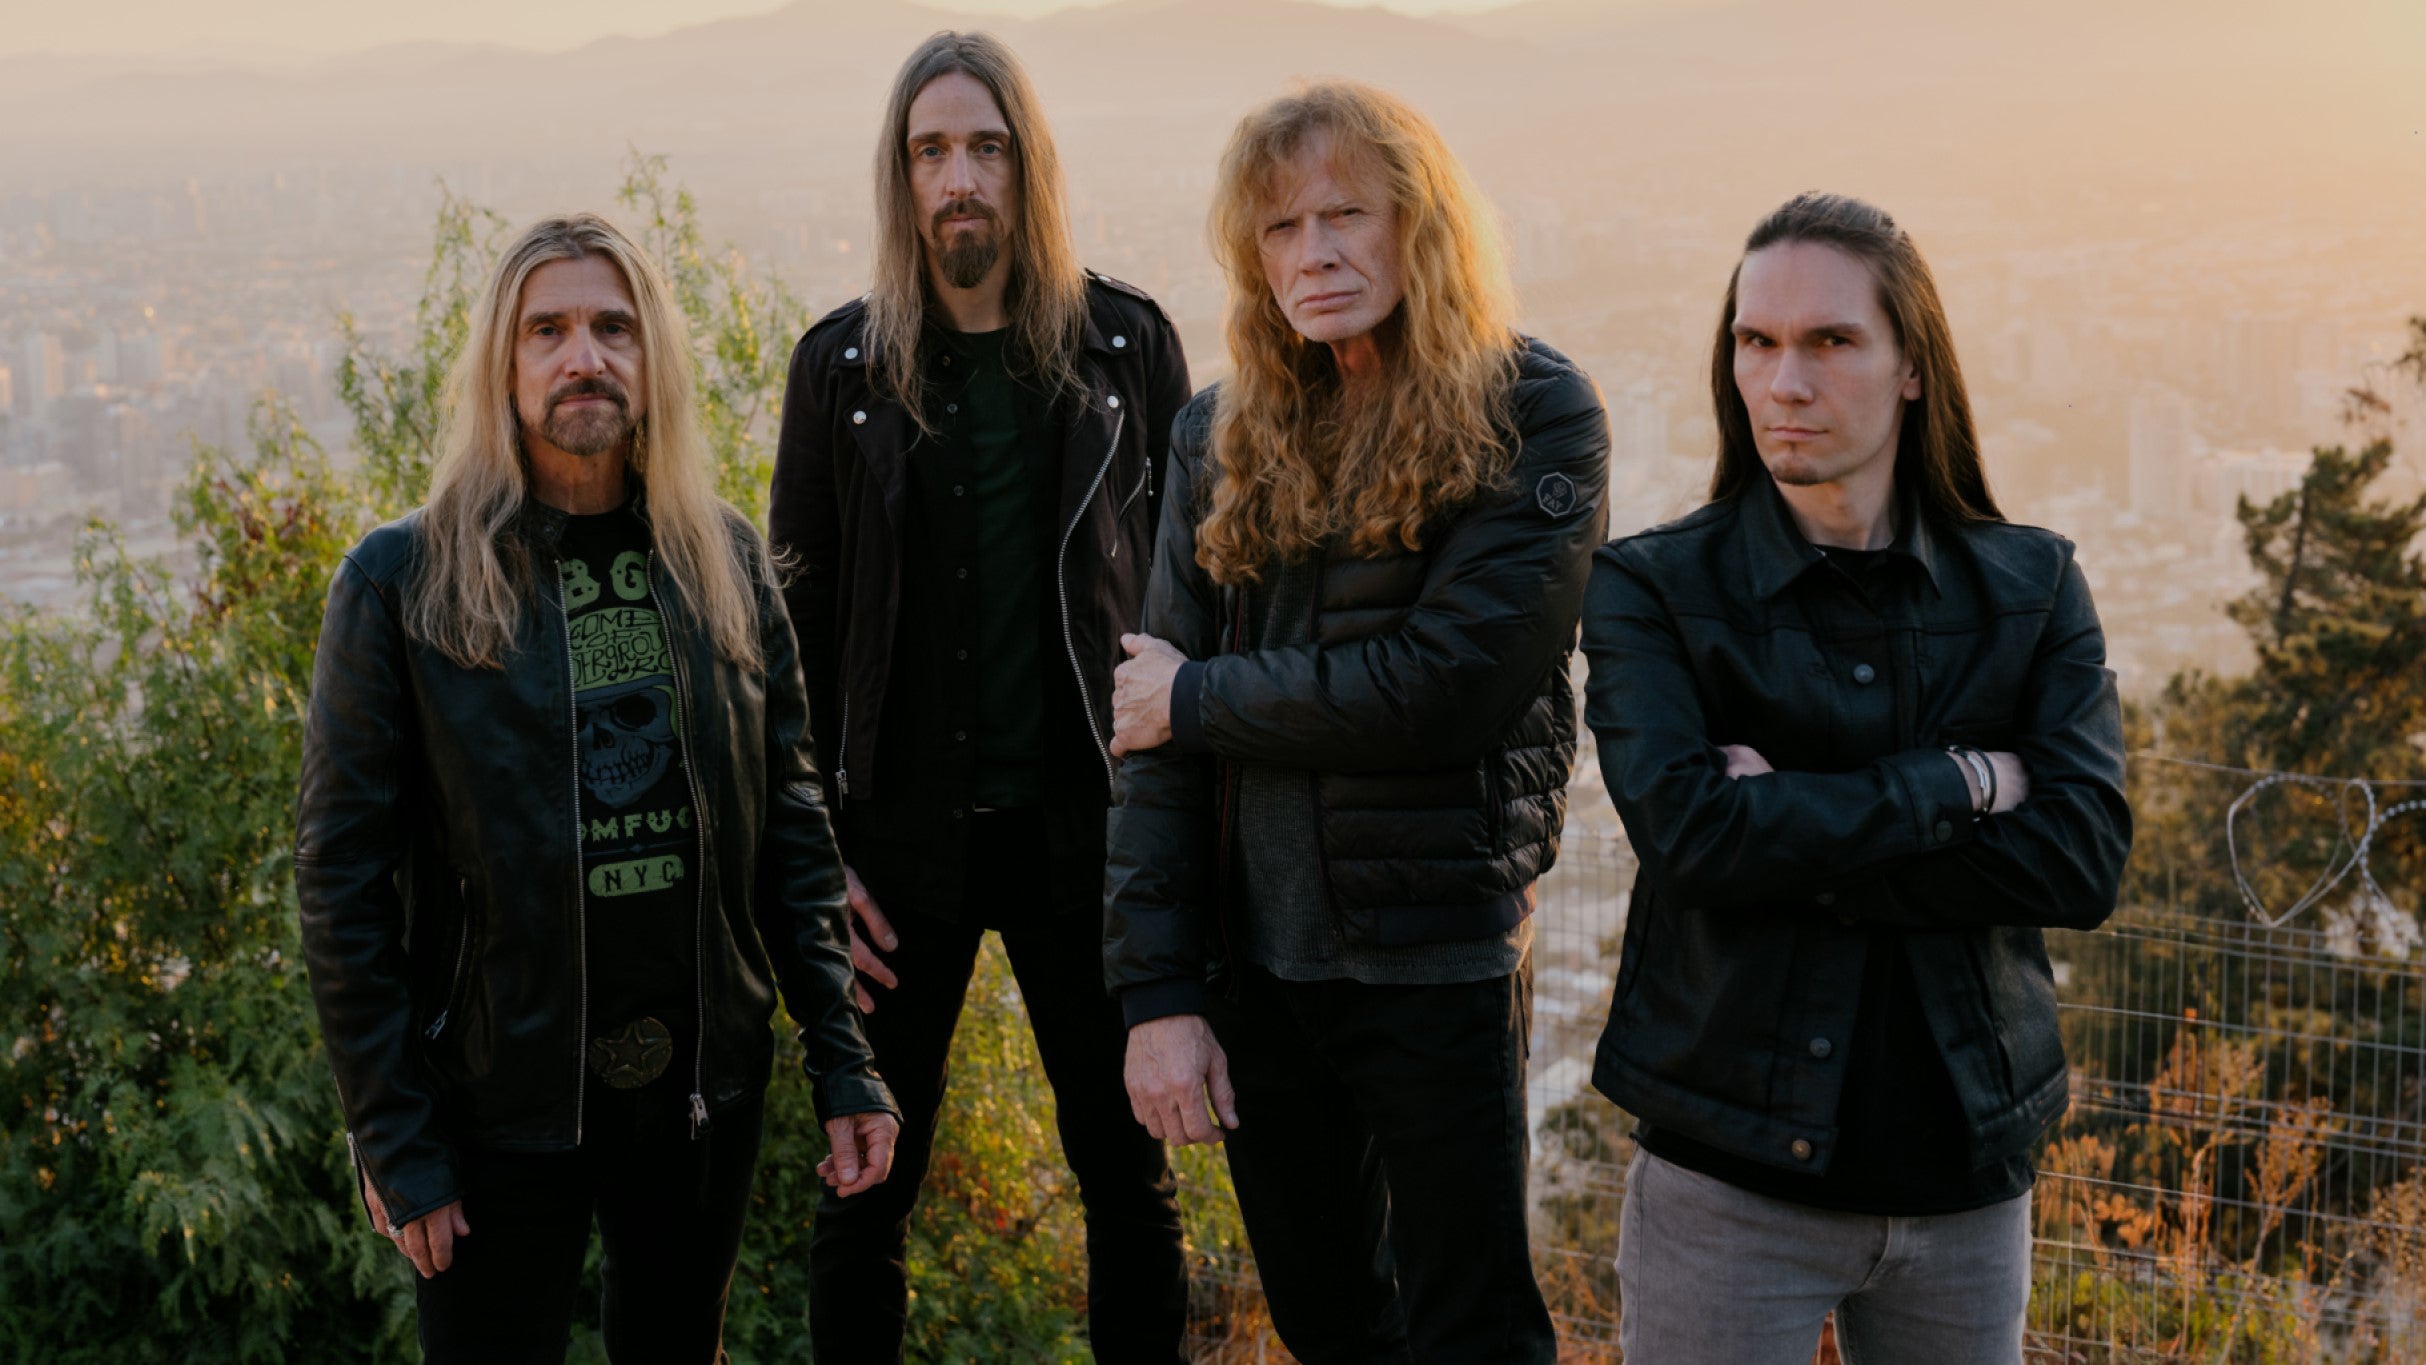 Megadeth - Destroy All Enemies Tour presale code for event tickets in Nashville, TN (Nashville Municipal Auditorium)